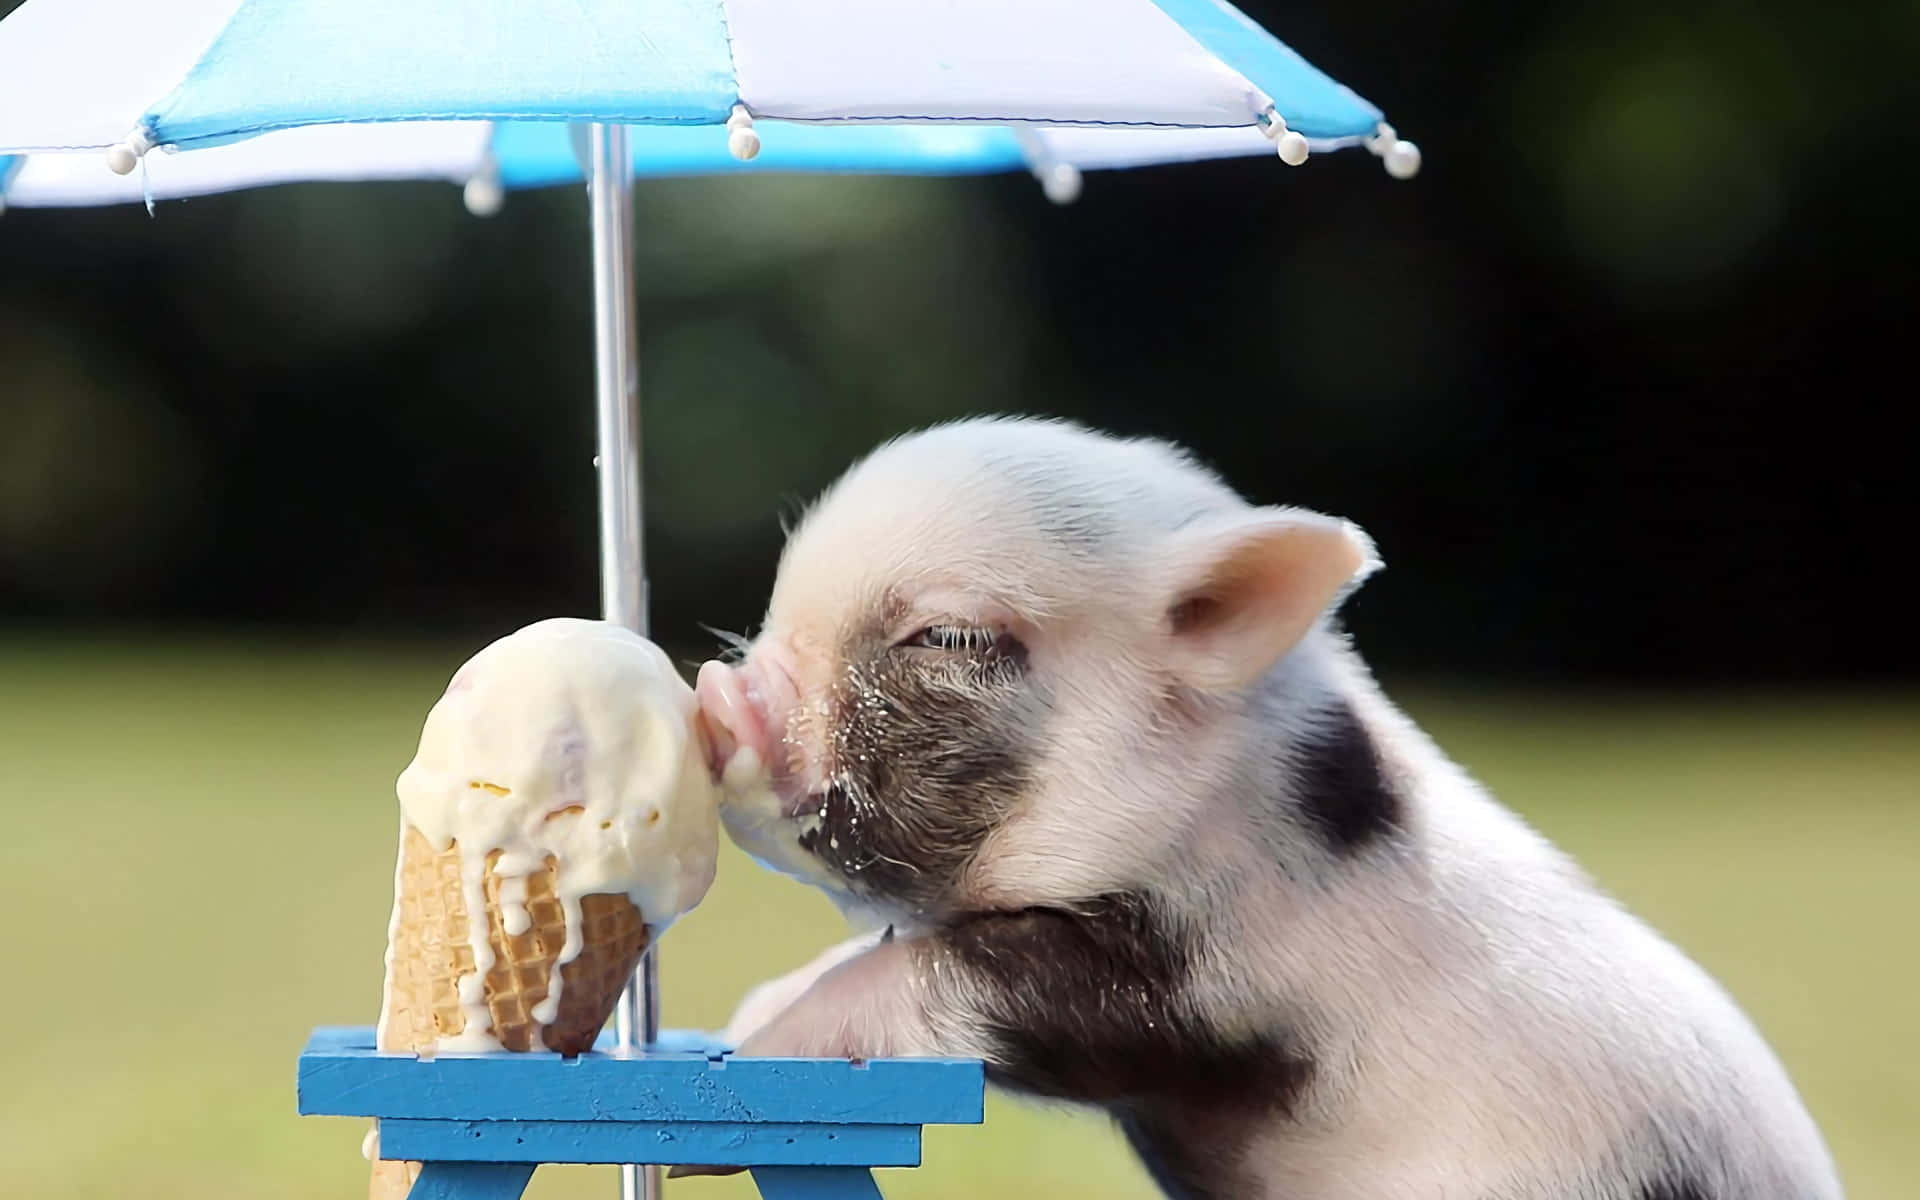 A Baby Pig Eating Ice Cream Under An Umbrella